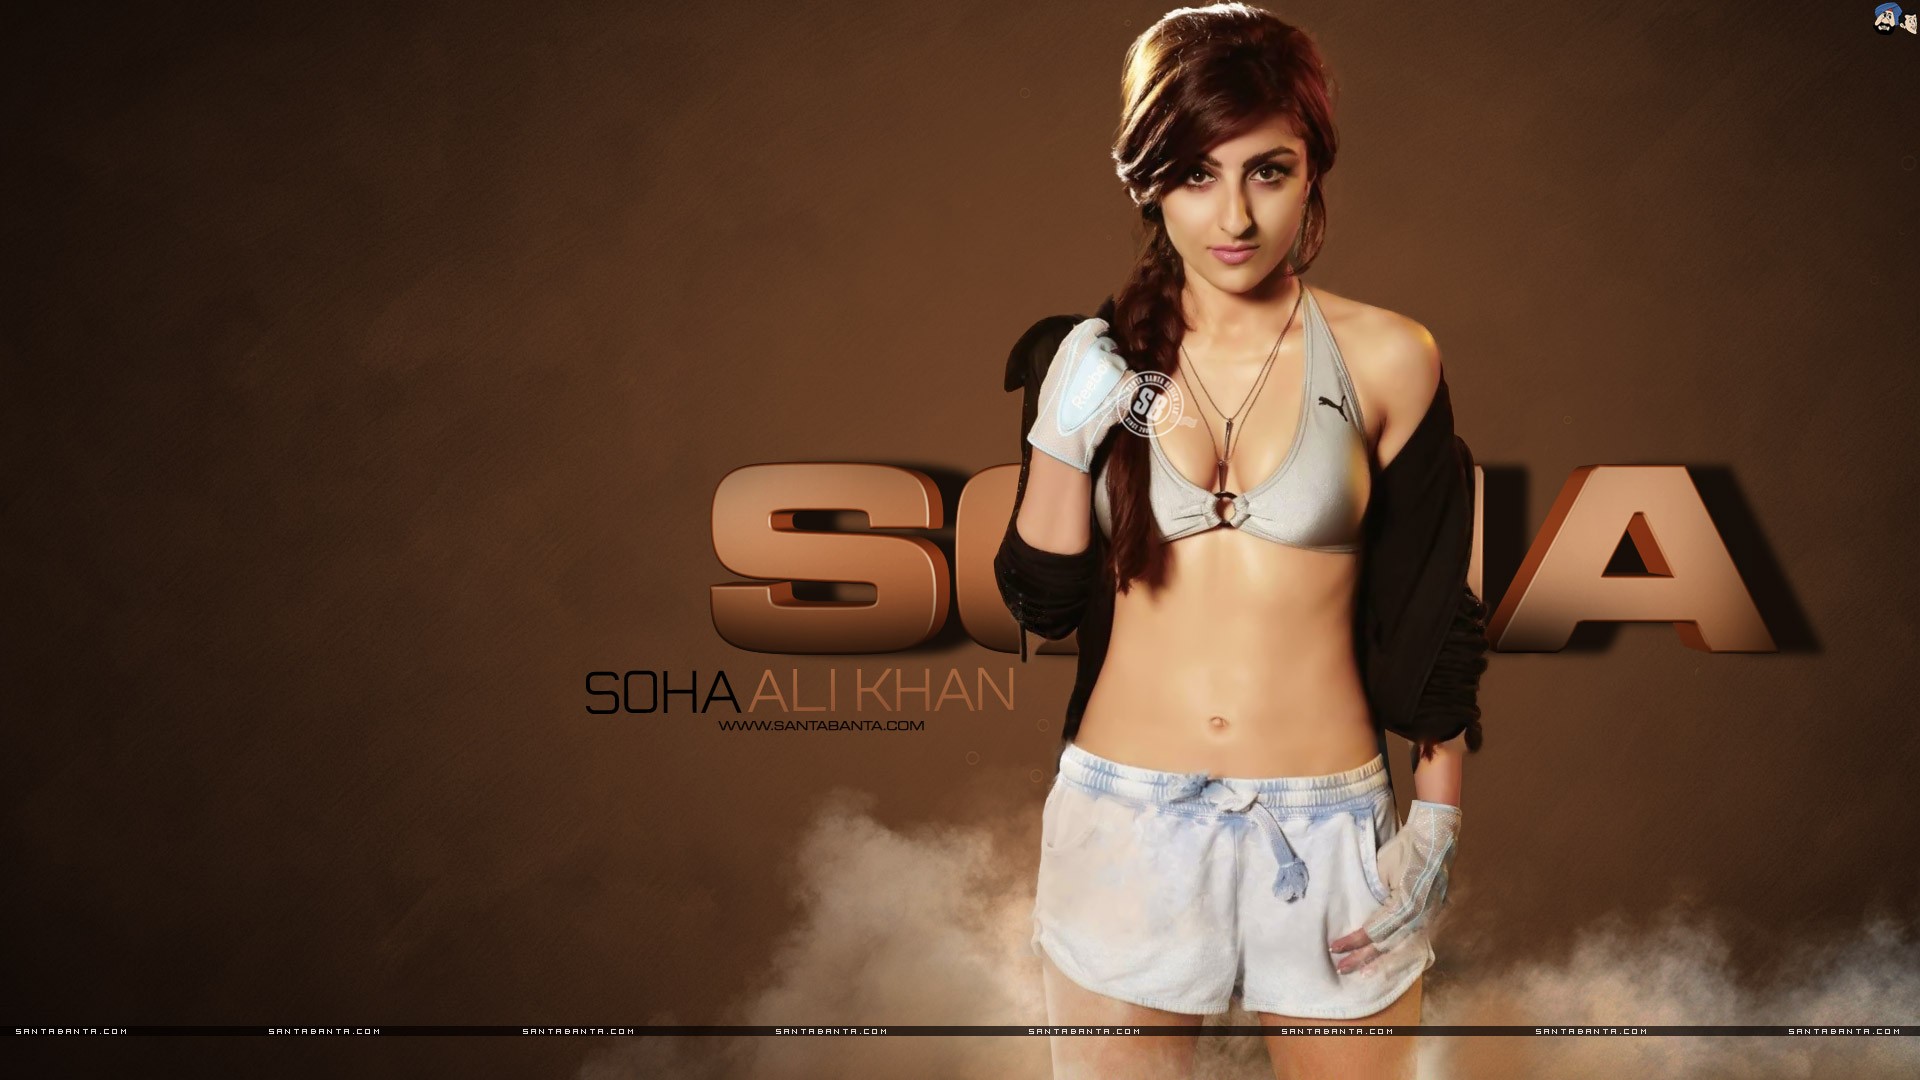 Soha Ali Khan Sexpicter